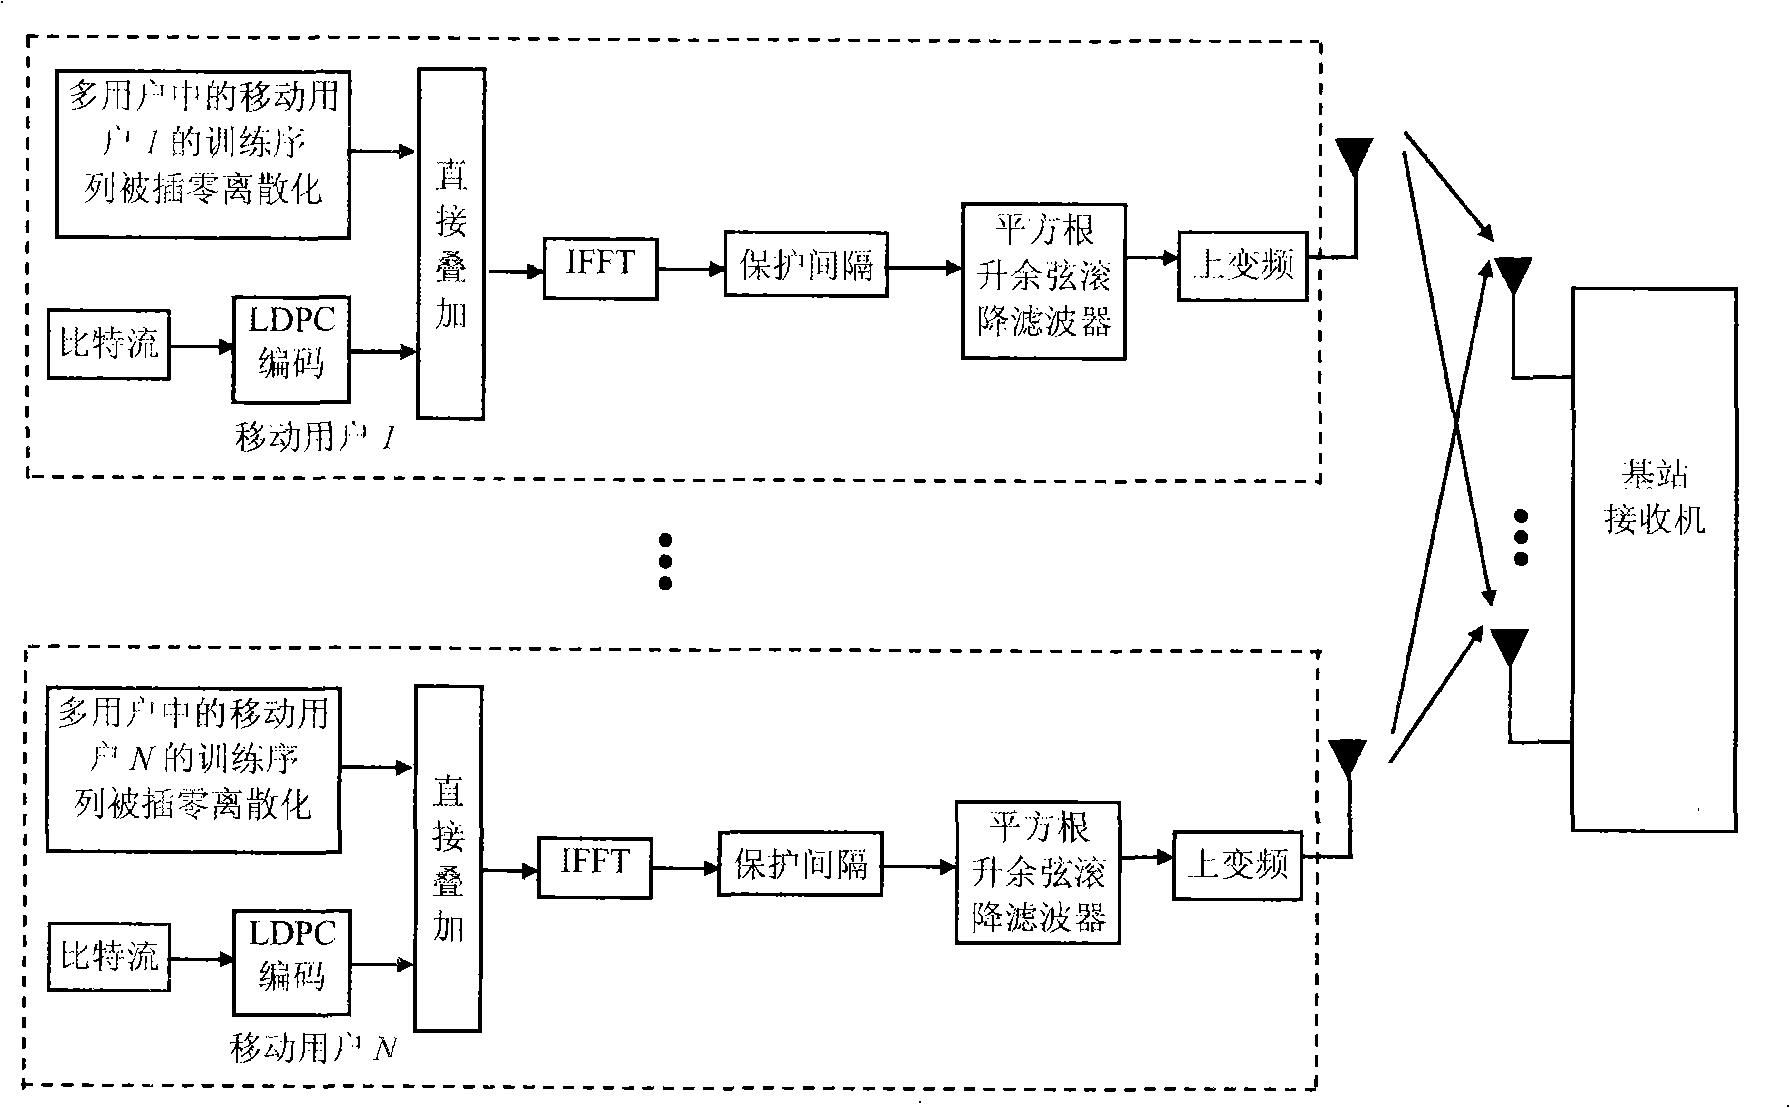 Multi-user OFDM modulation method based on imbedded training sequence and LDPC code